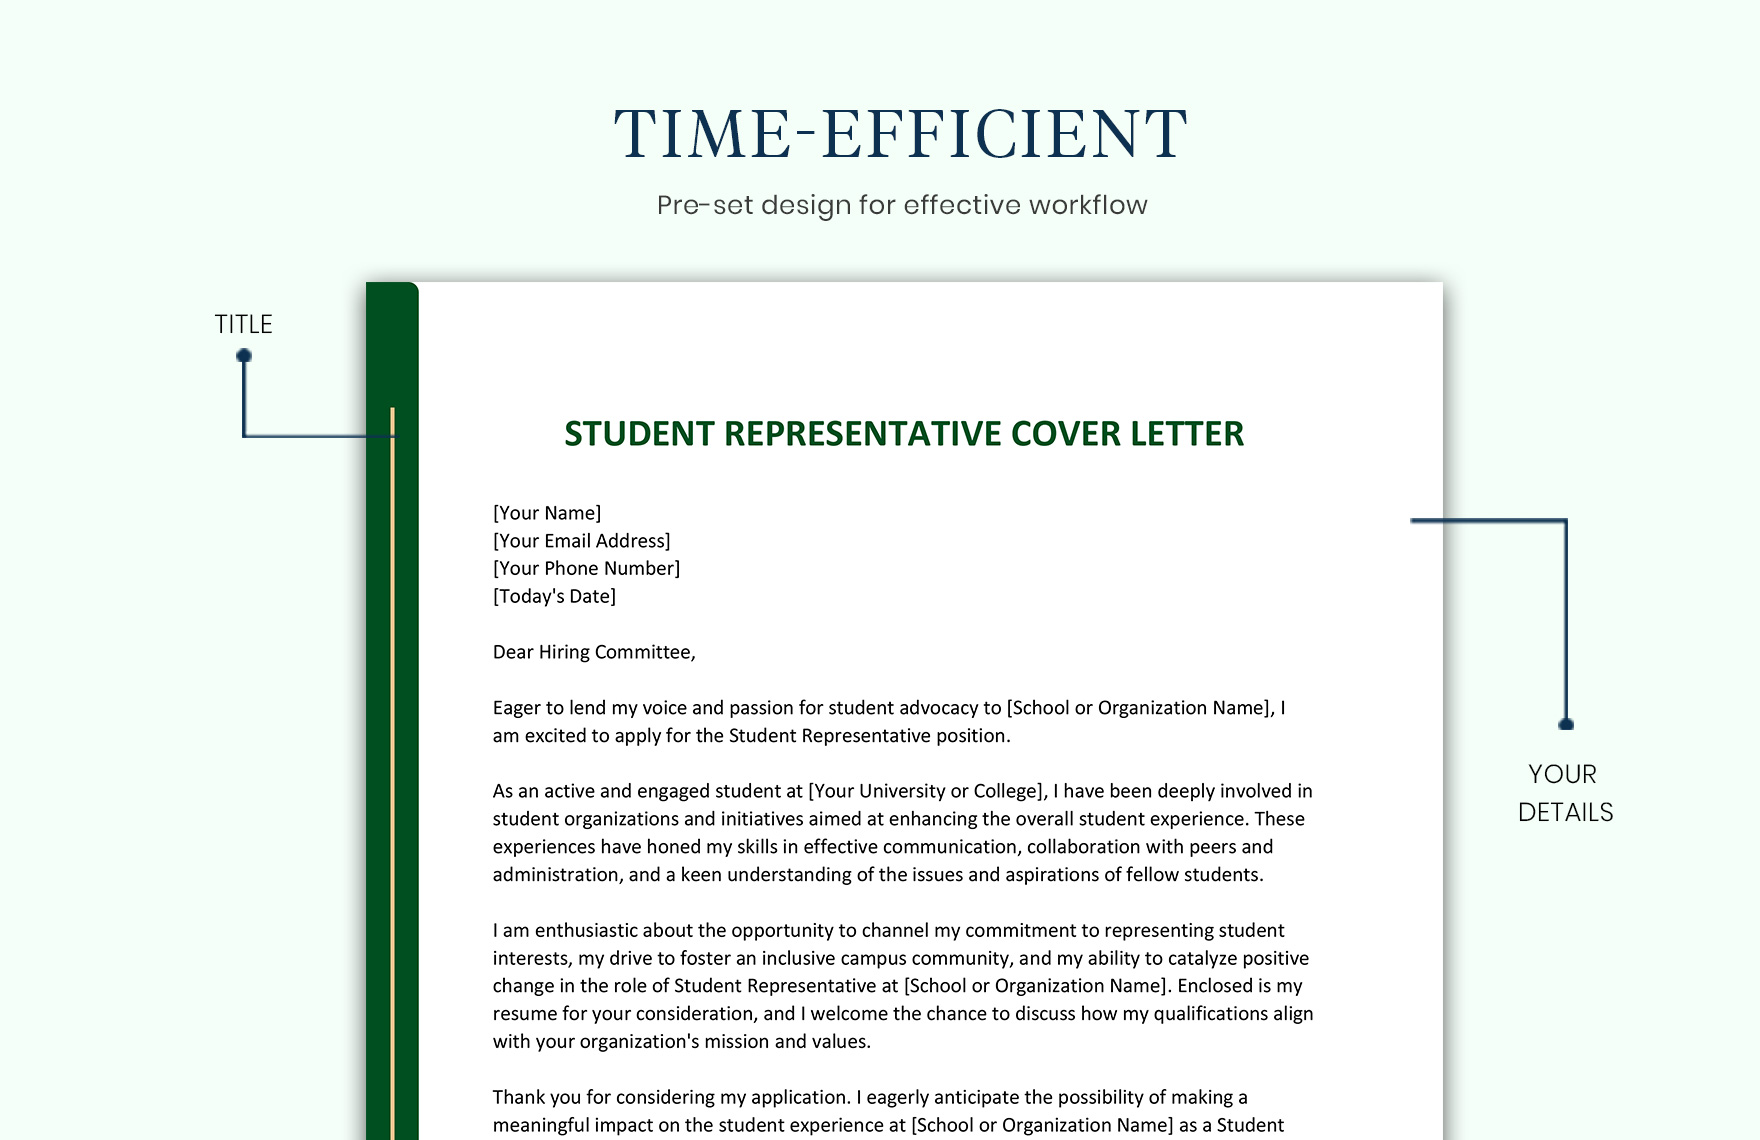 Student Representative Cover Letter